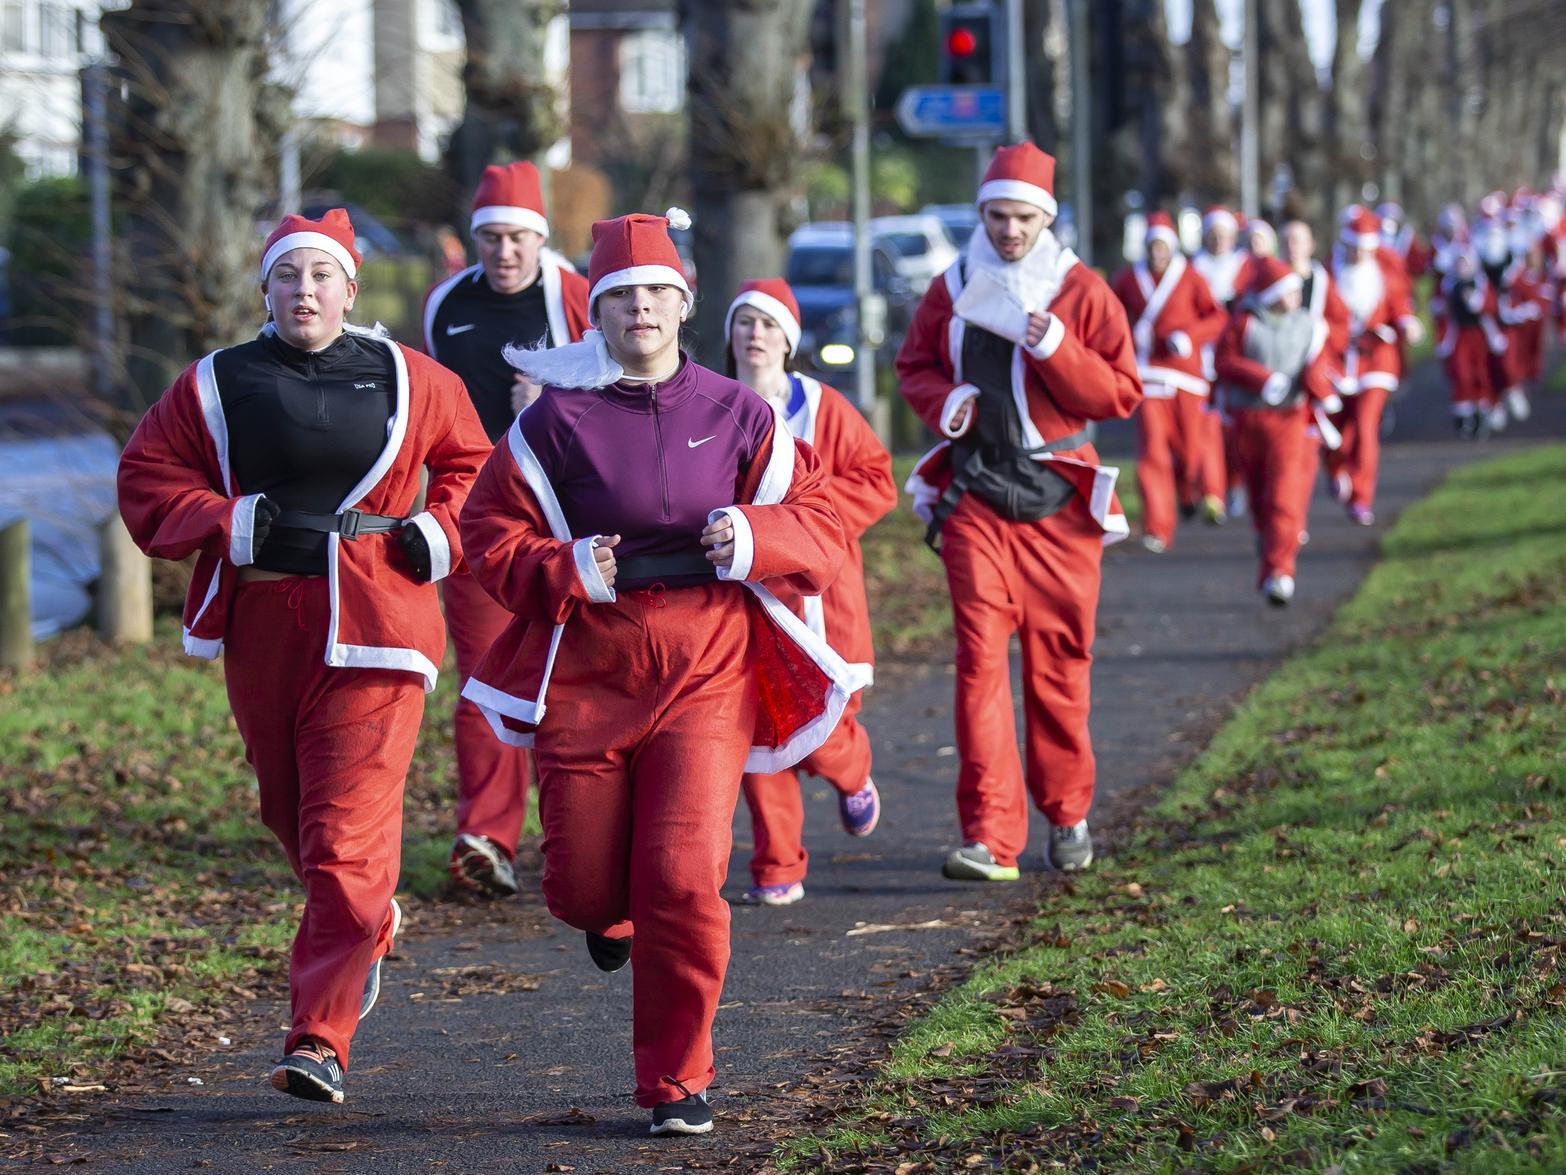 Santa Fun Run at the Racecourse, Northampton